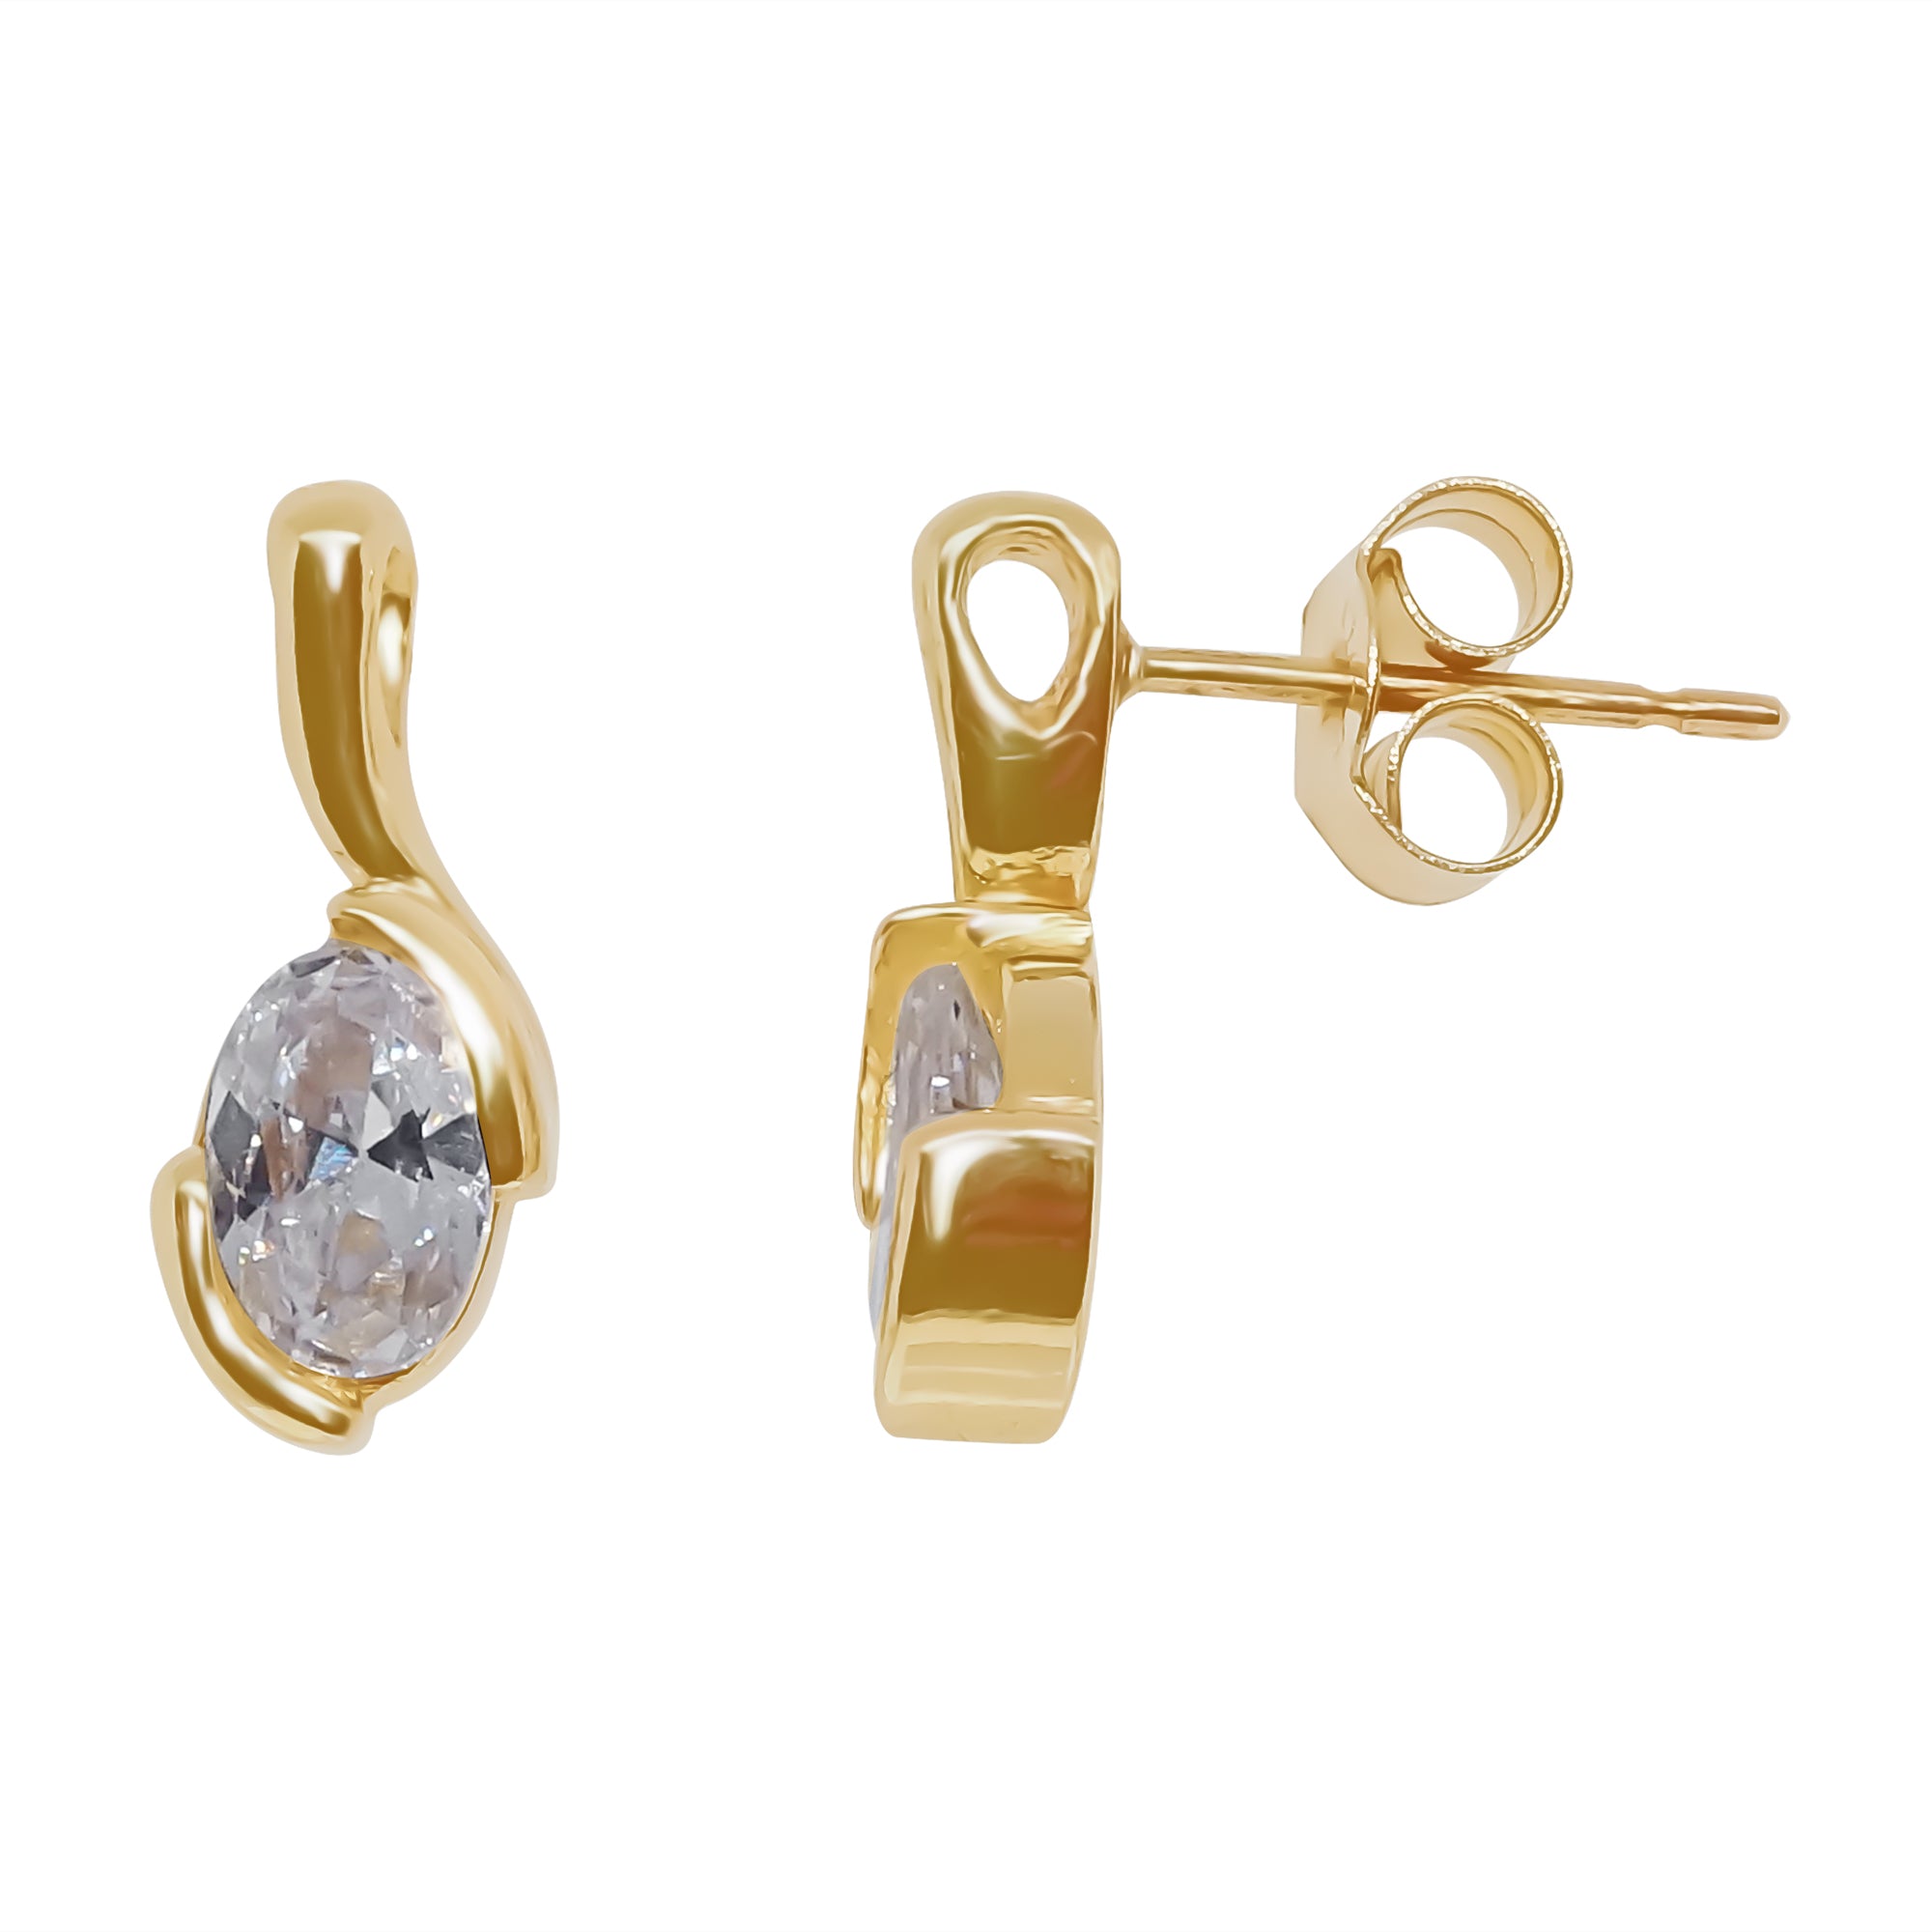 9ct gold cz studs earrings